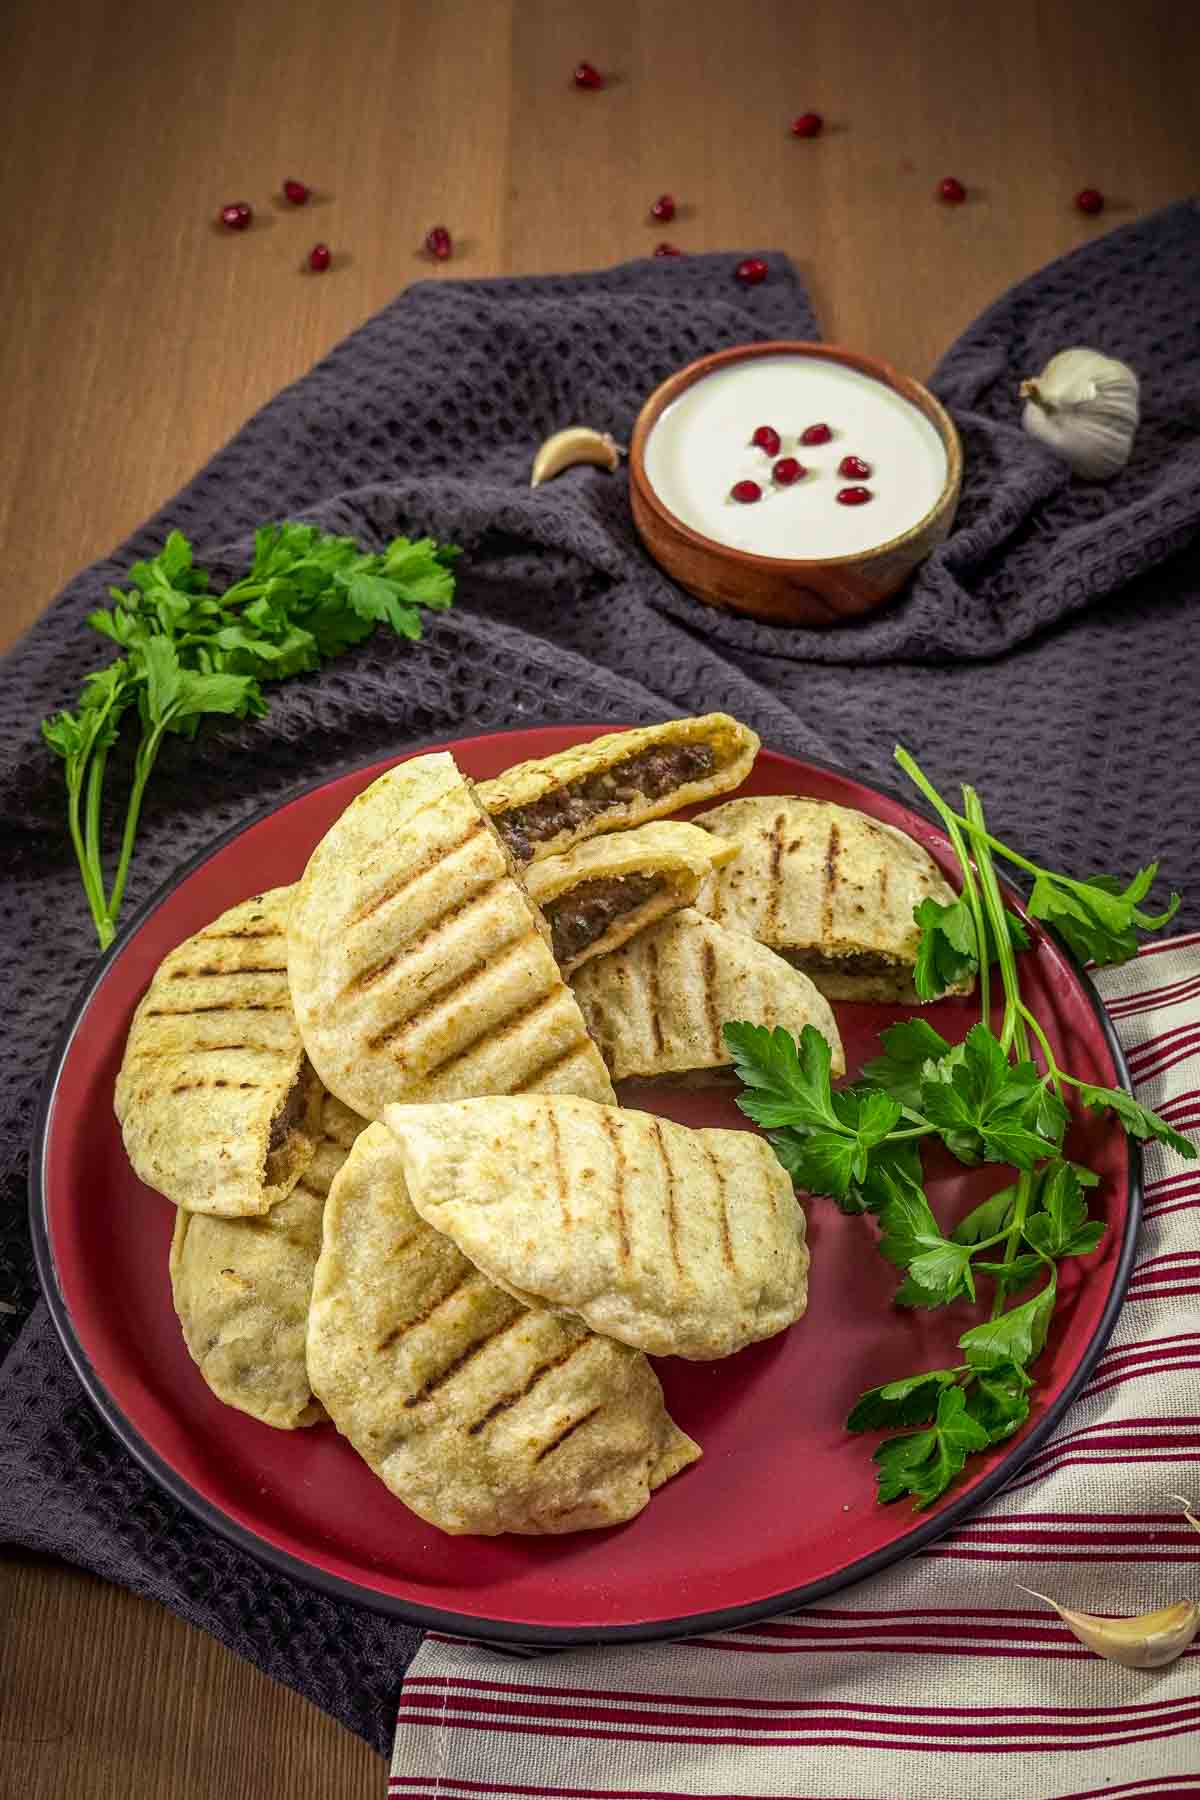 Several Lebanese stuffed pita sandwiches on a red tray.